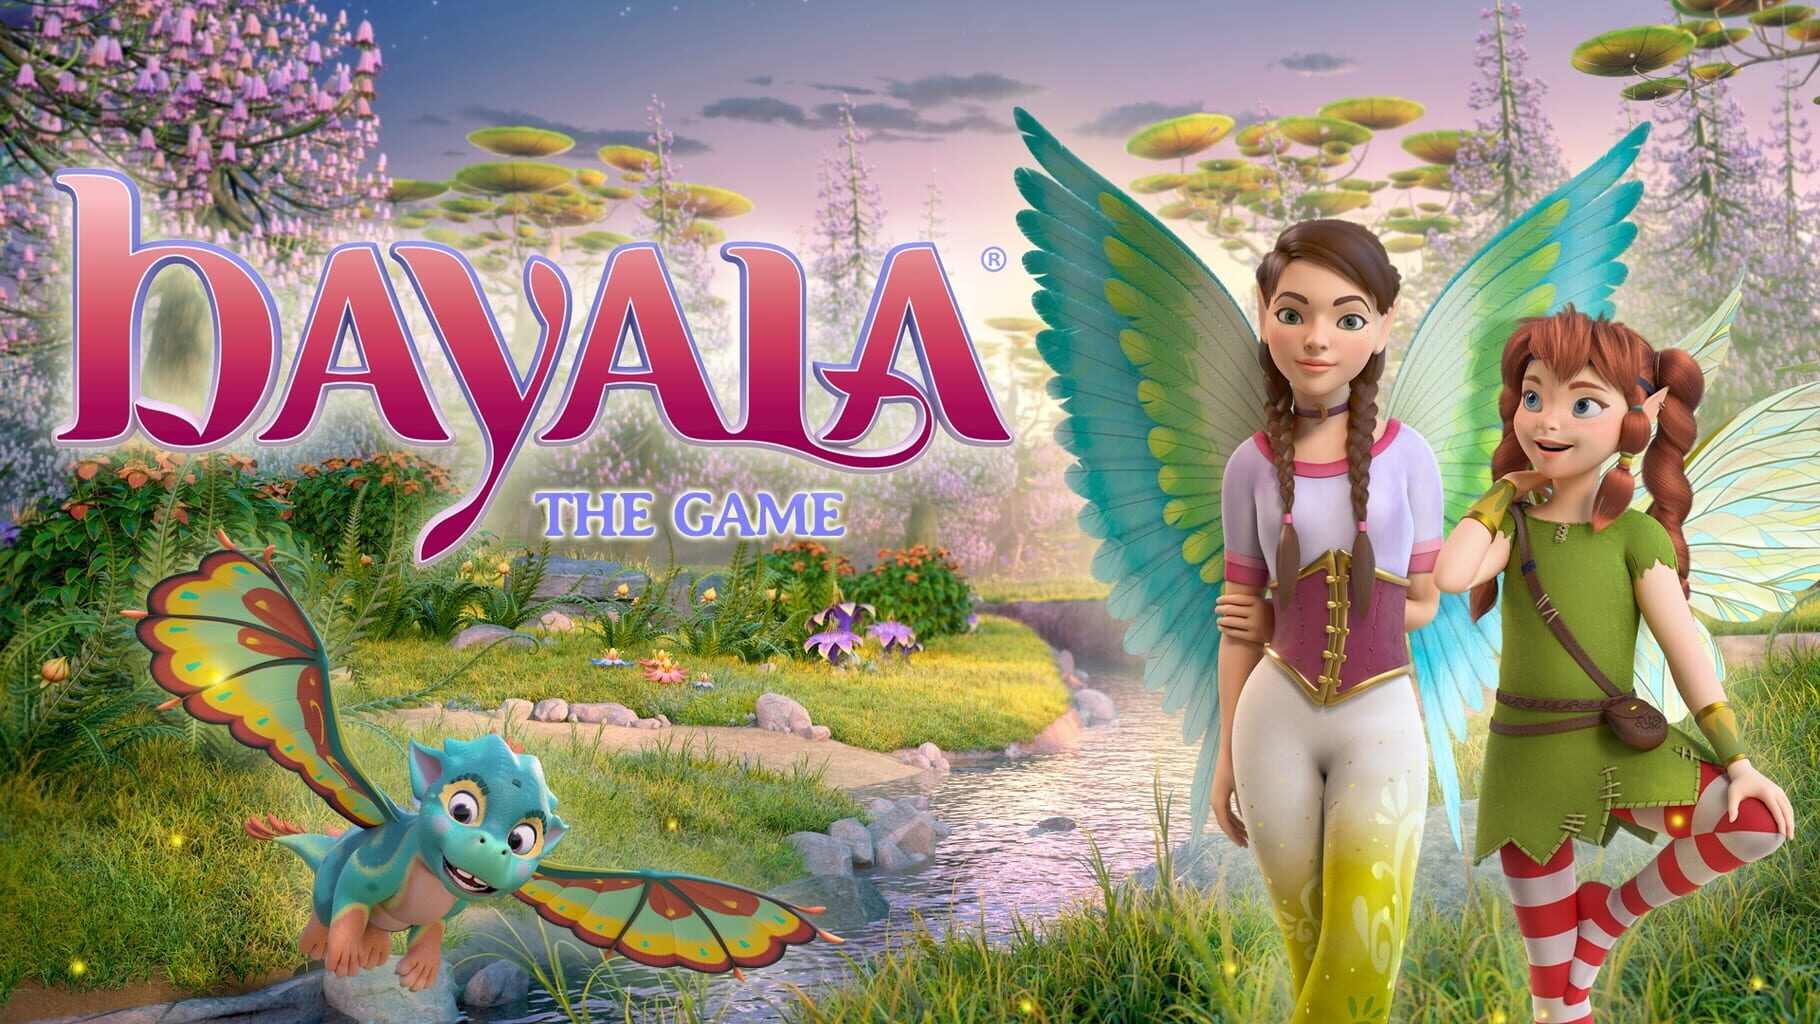 Bayala: The Game artwork